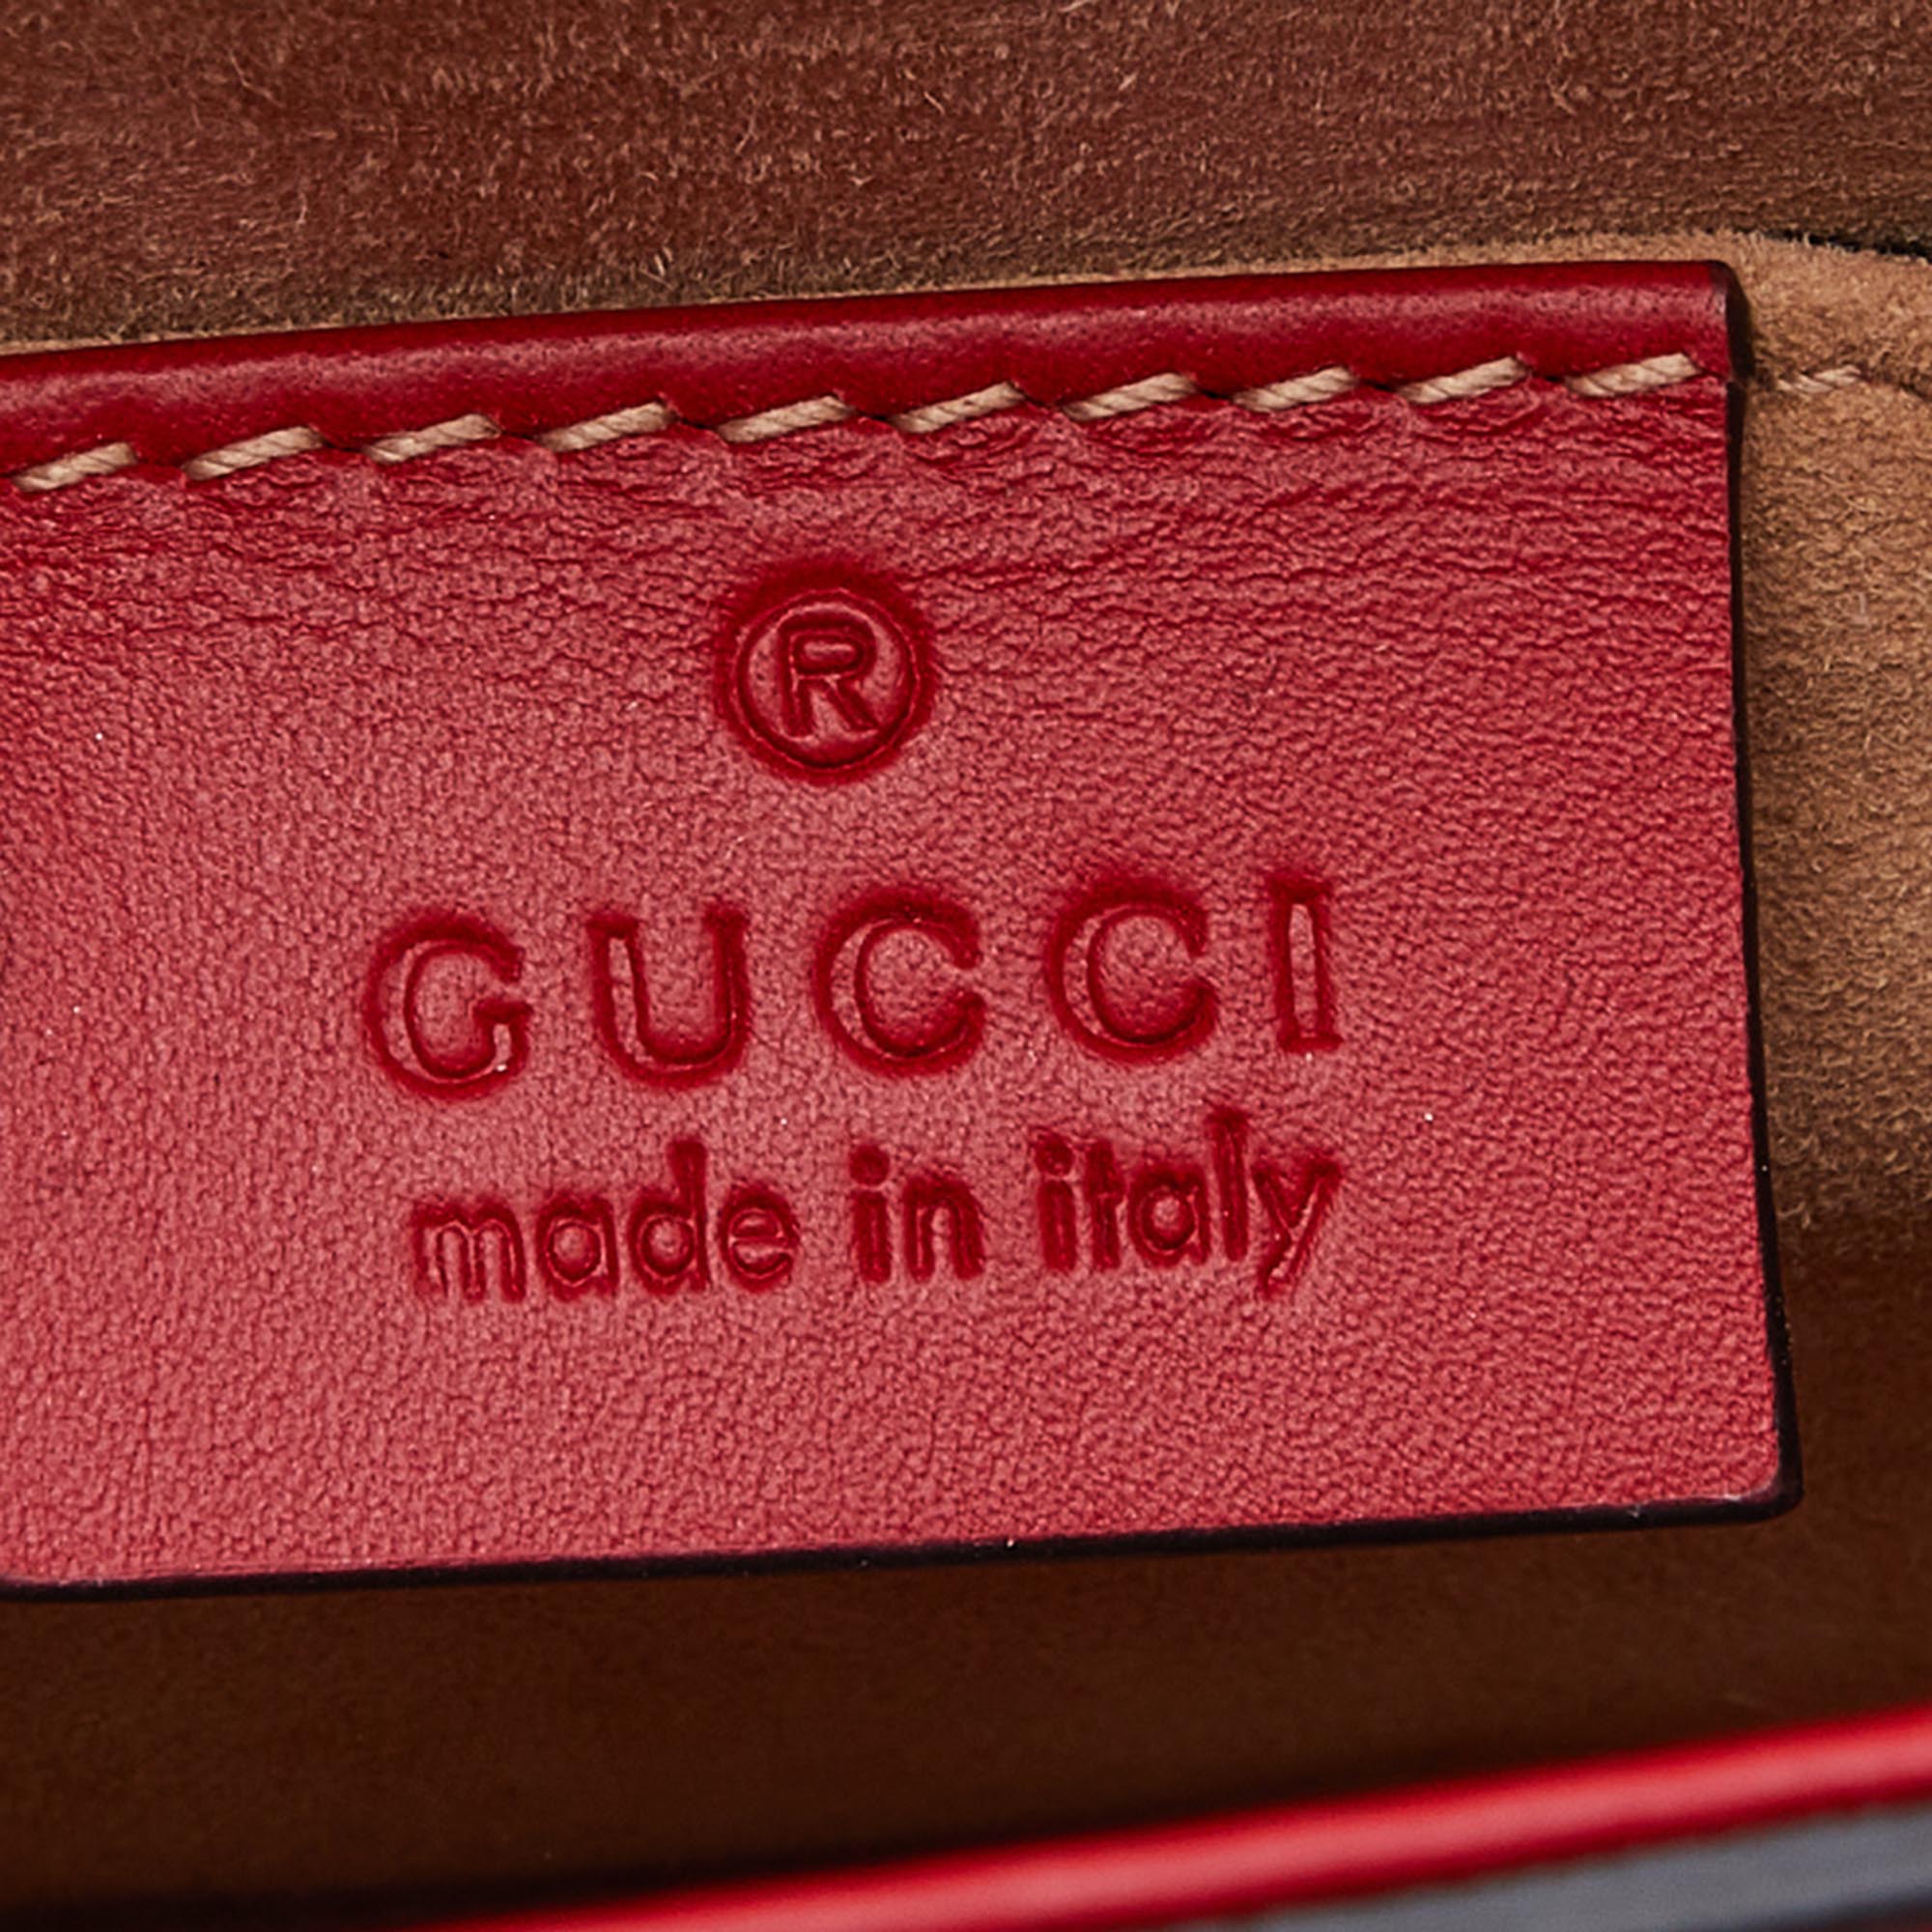 Gucci Red Leather Mini Web Chain Sylvie Crossbody Bag